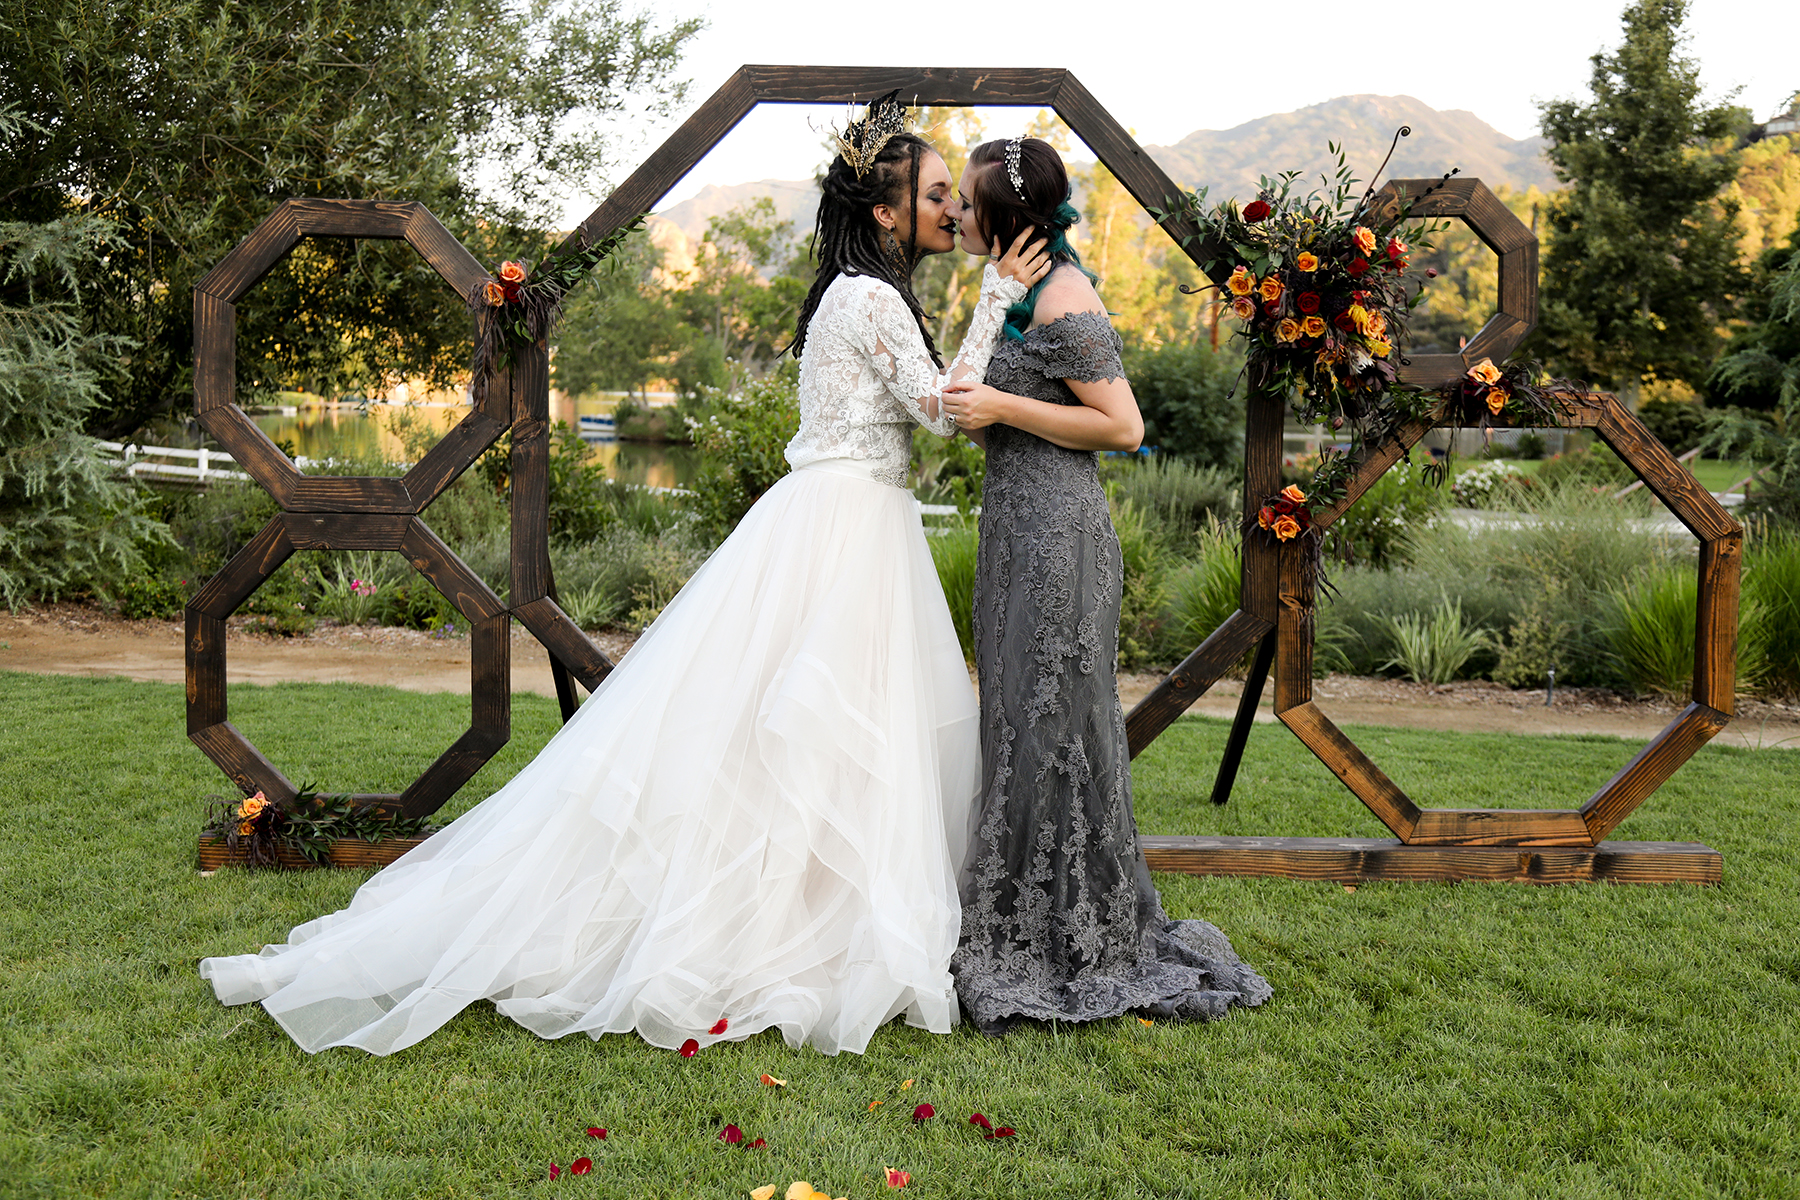 Gothic Halloween Wedding Inspiration with Bright Florals